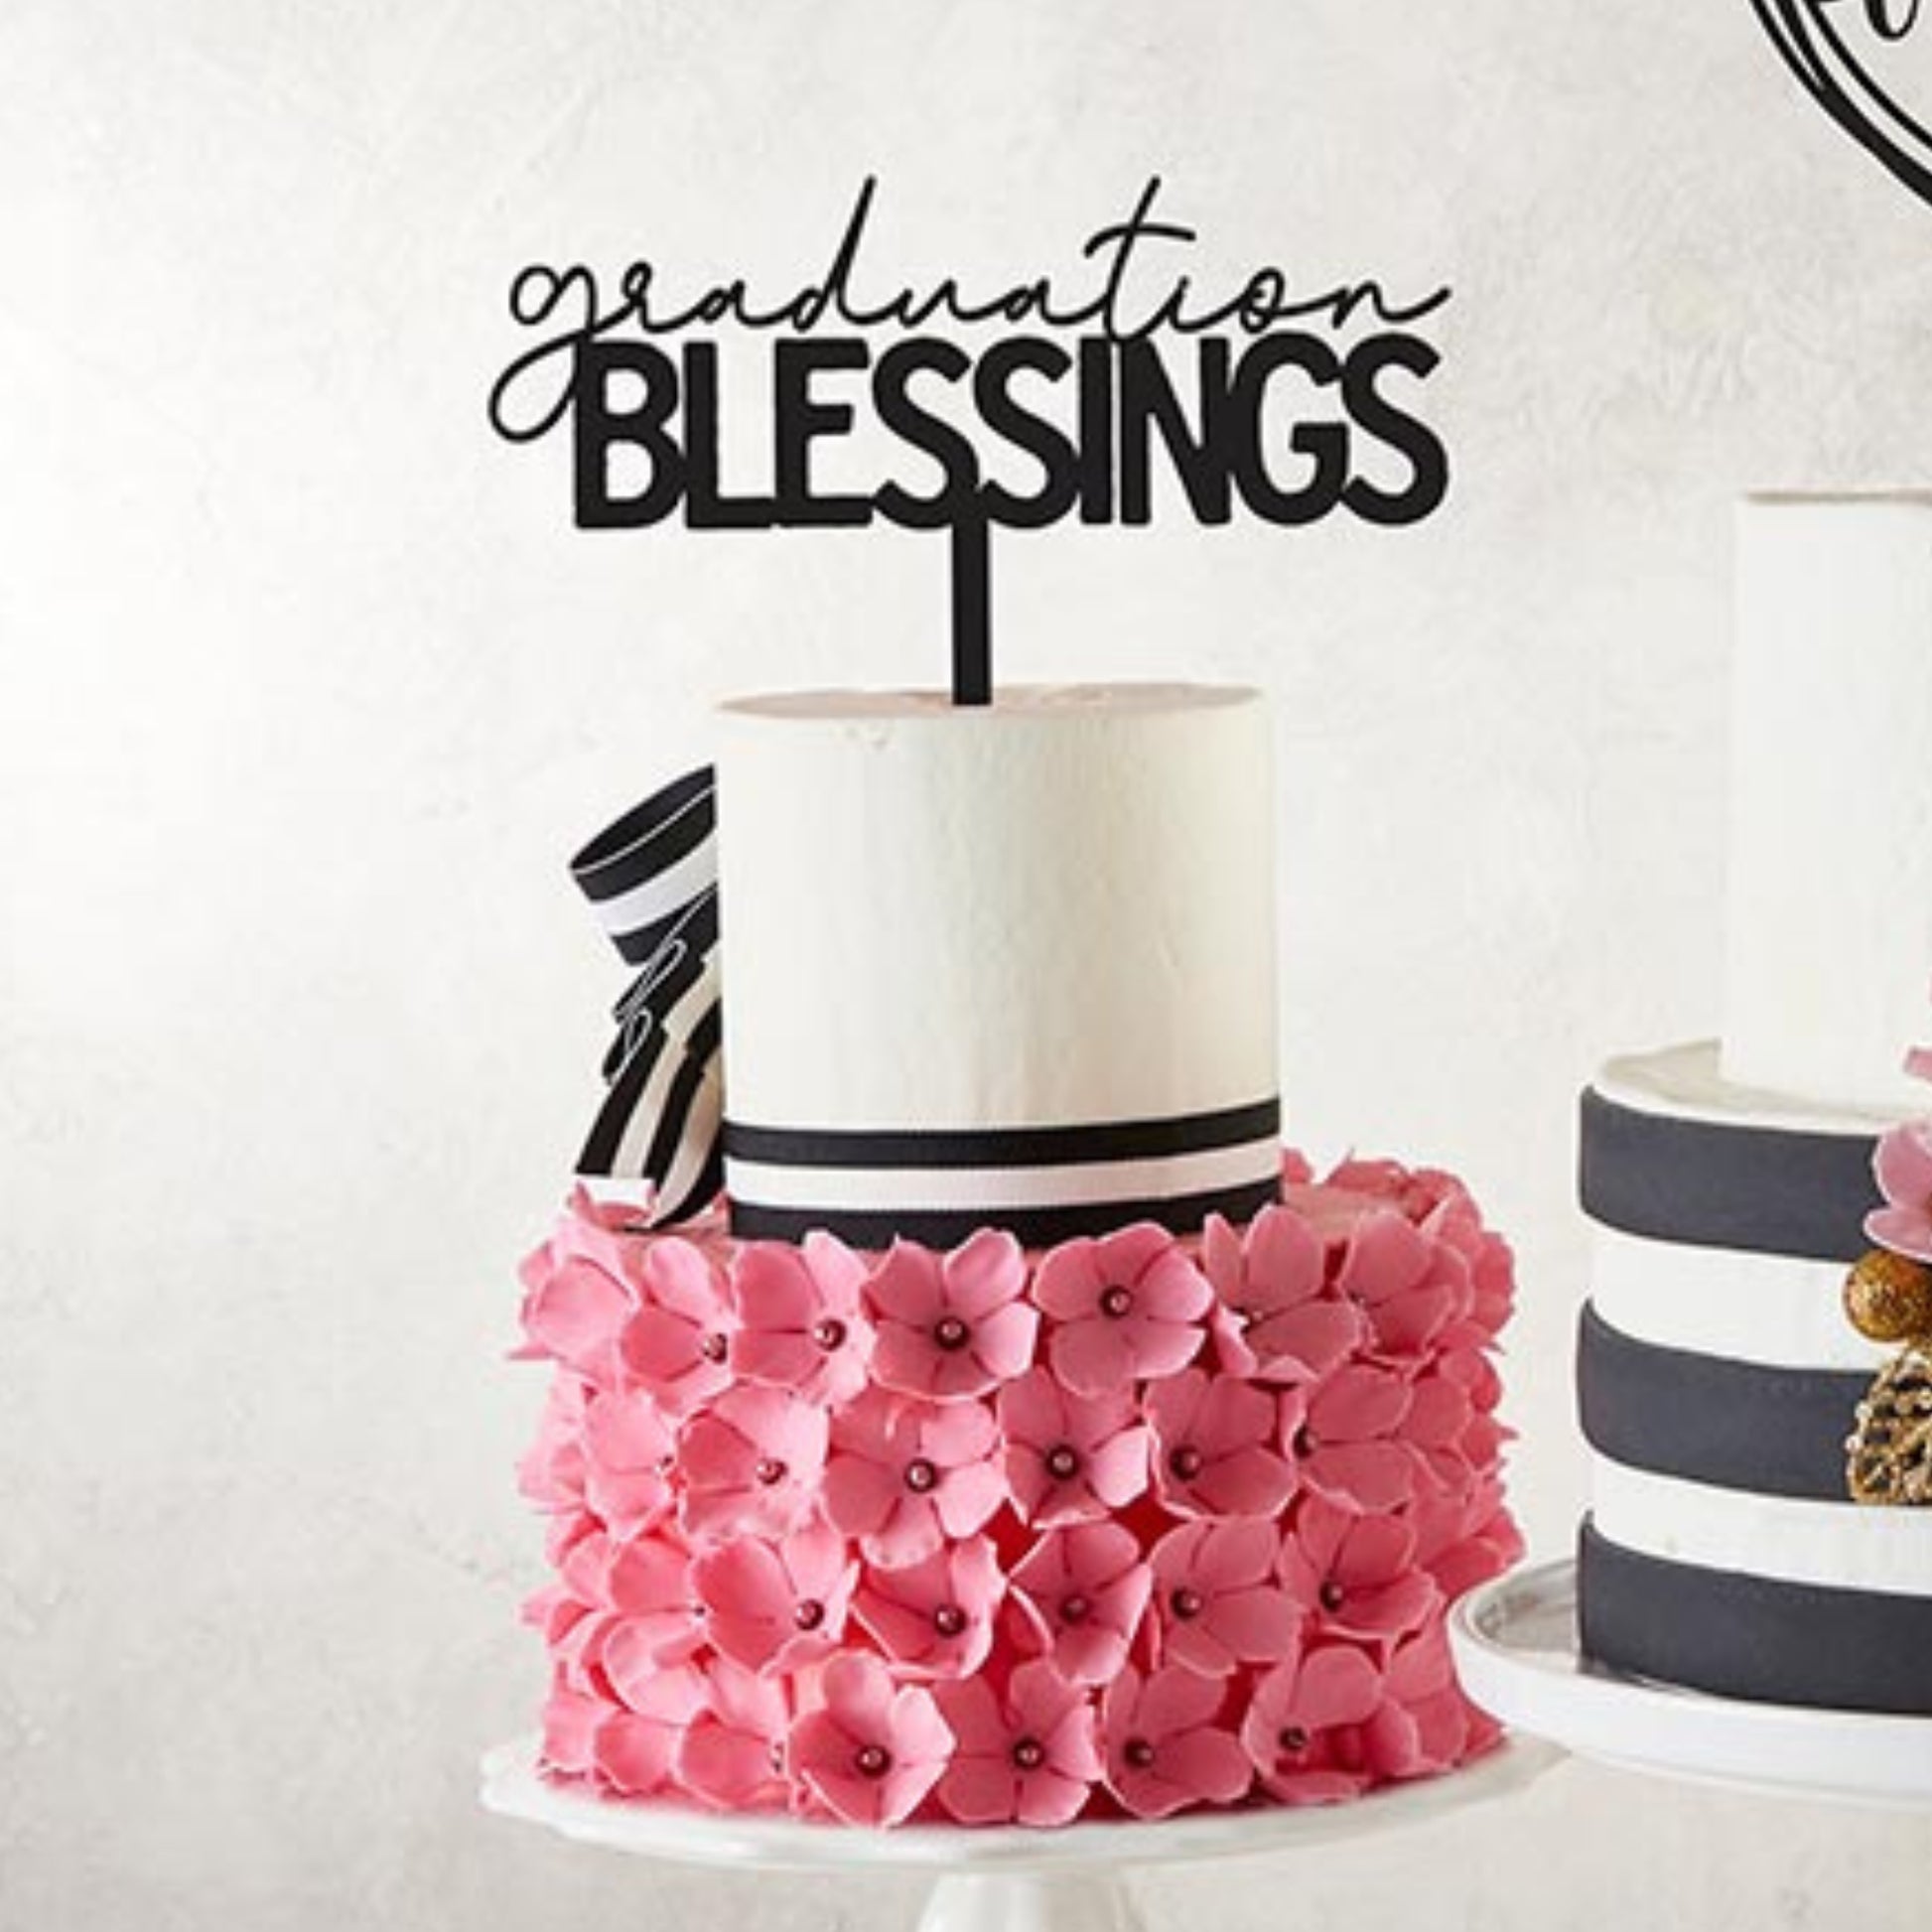 Acrylic Cake Topper - Graduation Blessings Cake Decoration | oak7west.com